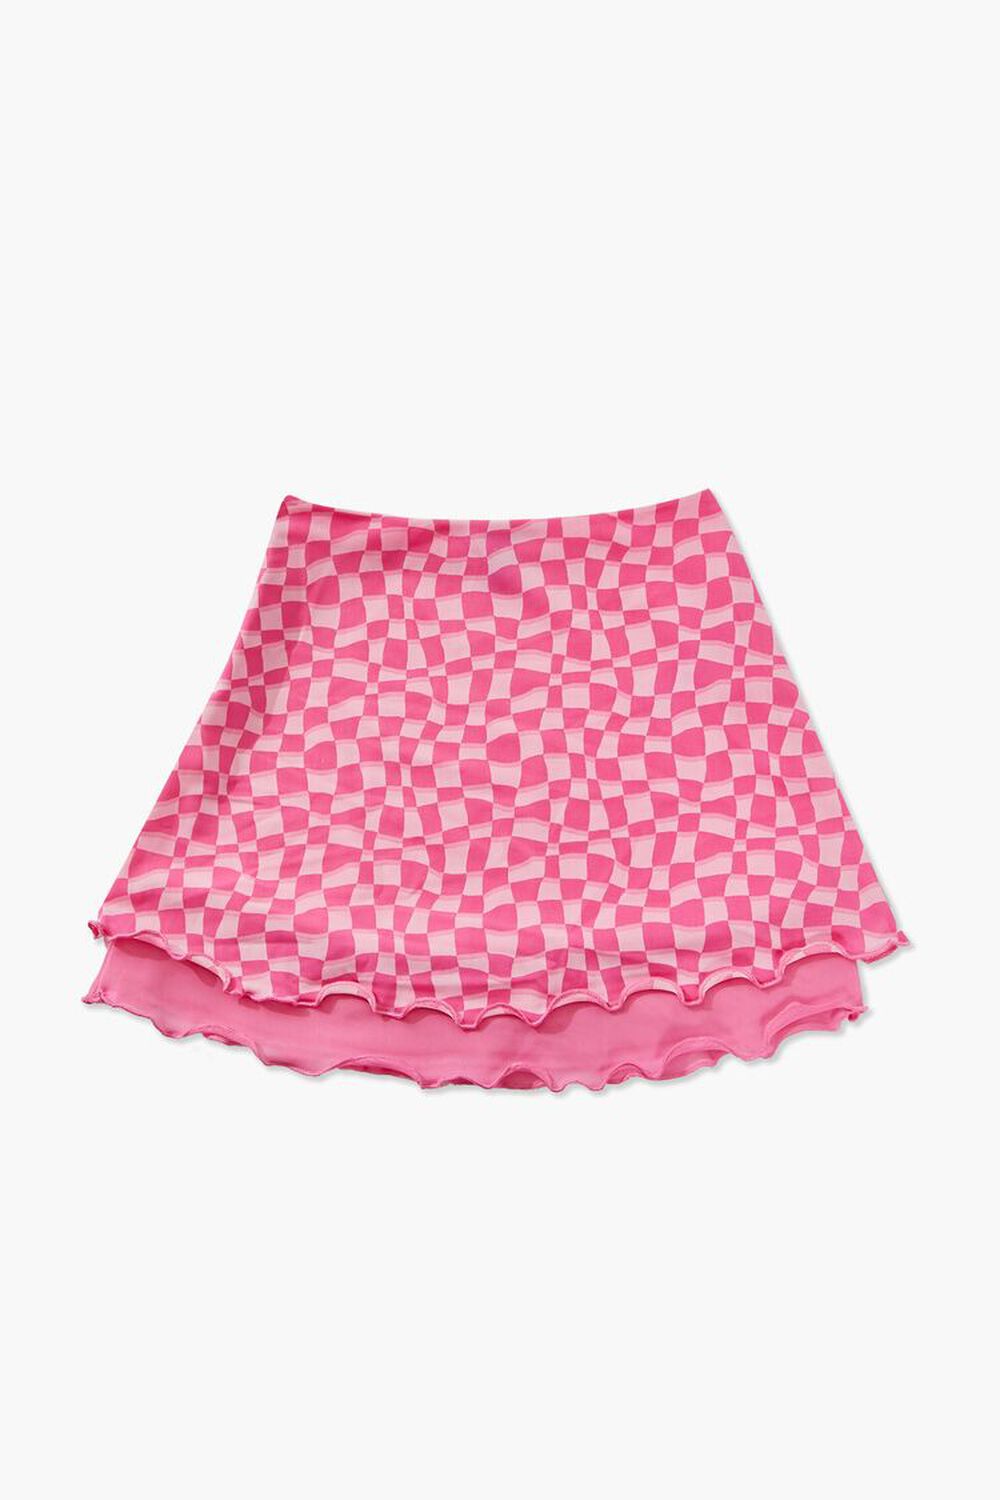 PINK/ORANGE Girls Checkered Tiered Skirt (Kids), image 2